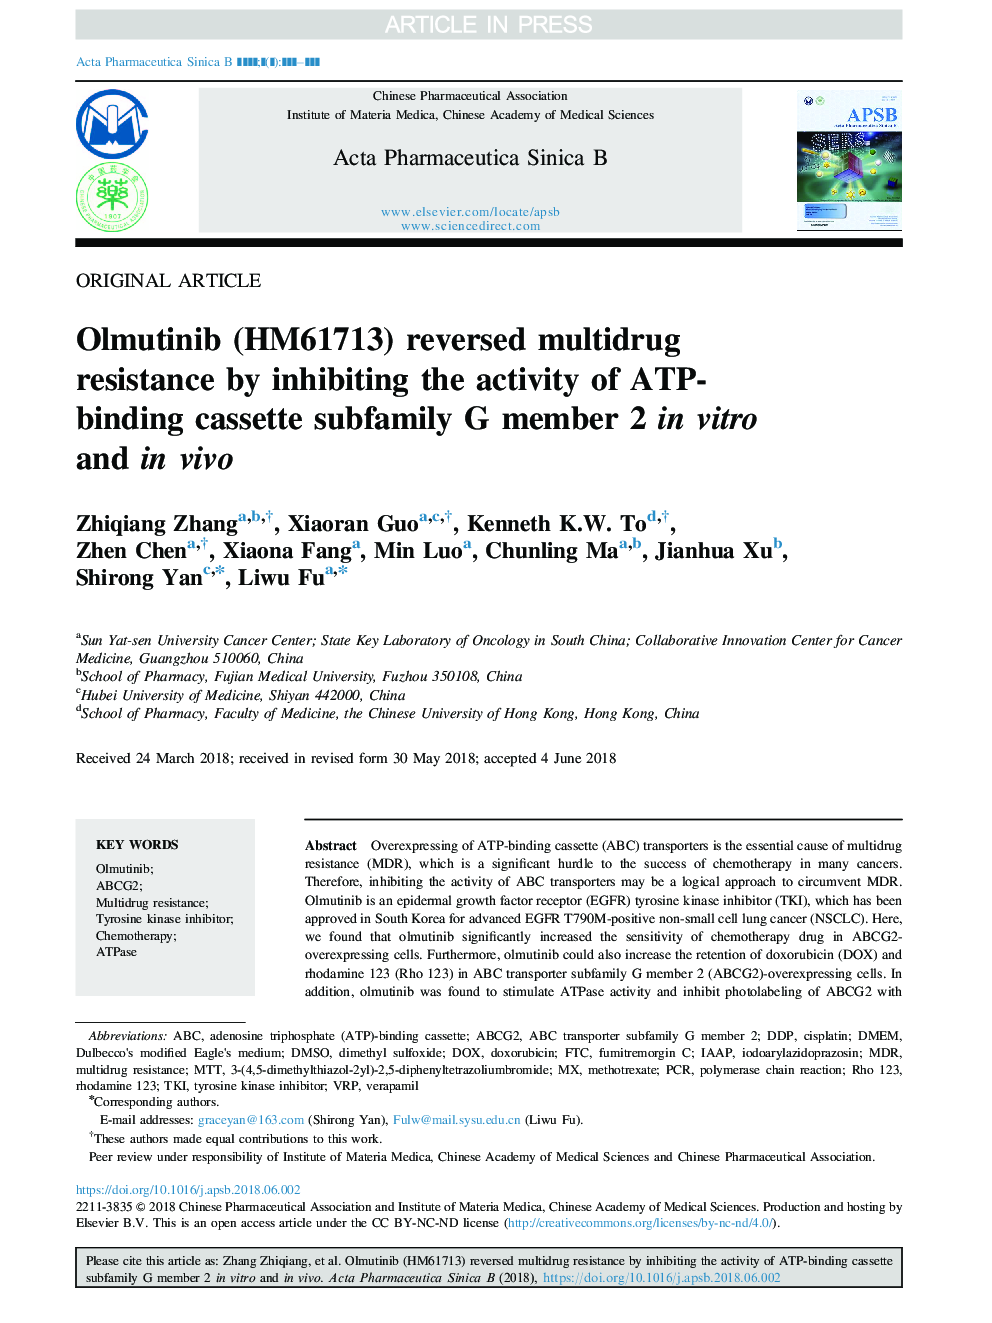 Olmutinib (HM61713) reversed multidrug resistance by inhibiting the activity of ATP-binding cassette subfamily G member 2 in vitro and in vivo